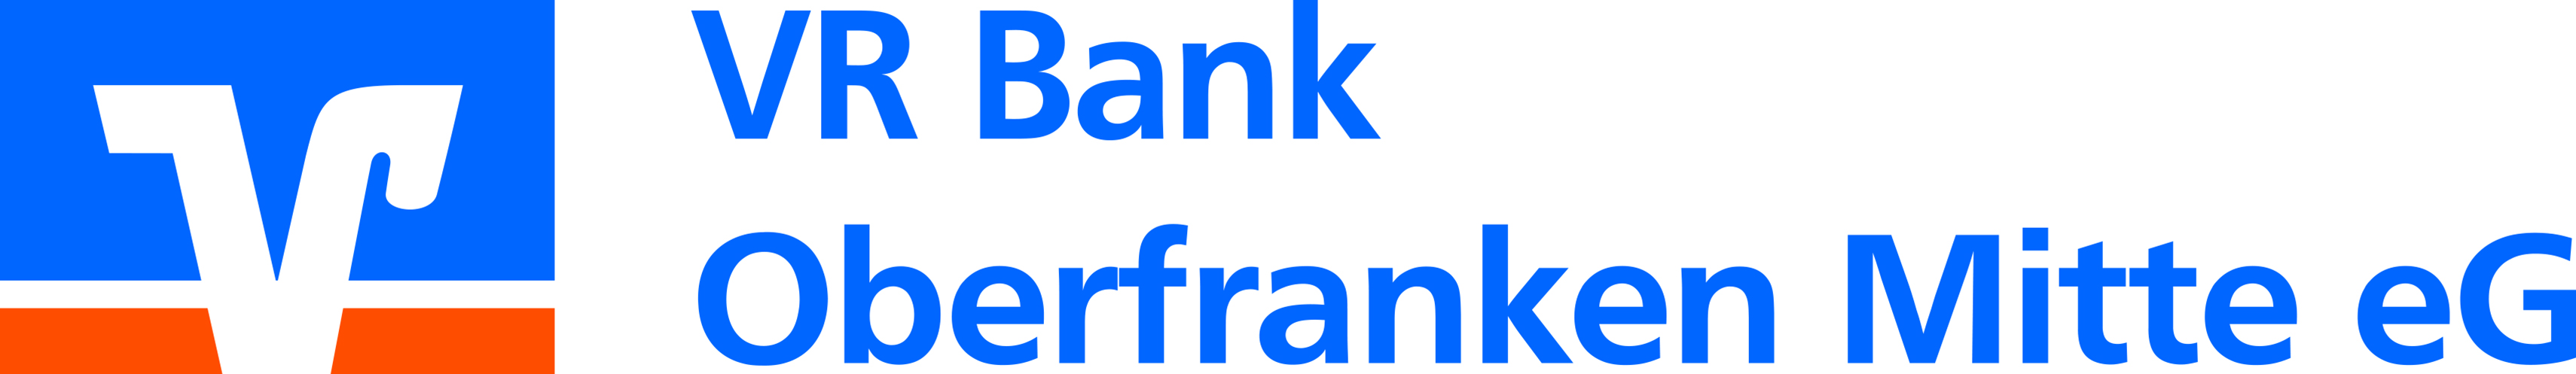 VR Bank OberfrankenMitteeG